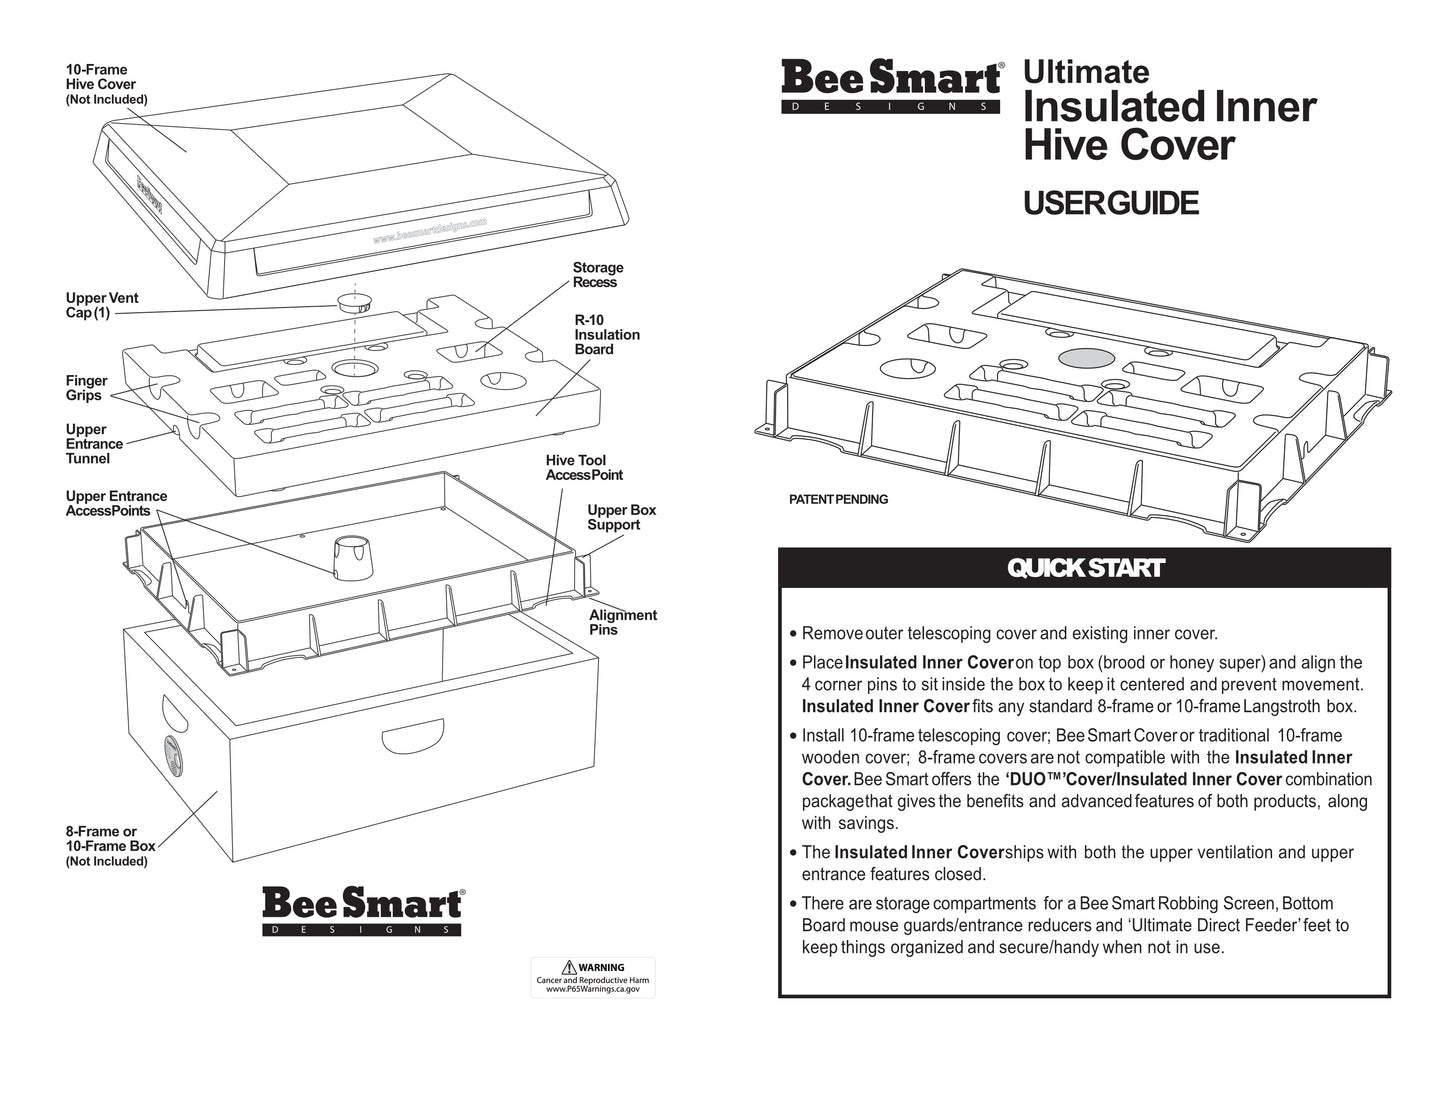 Bee Smart Ultimate Inner Cover